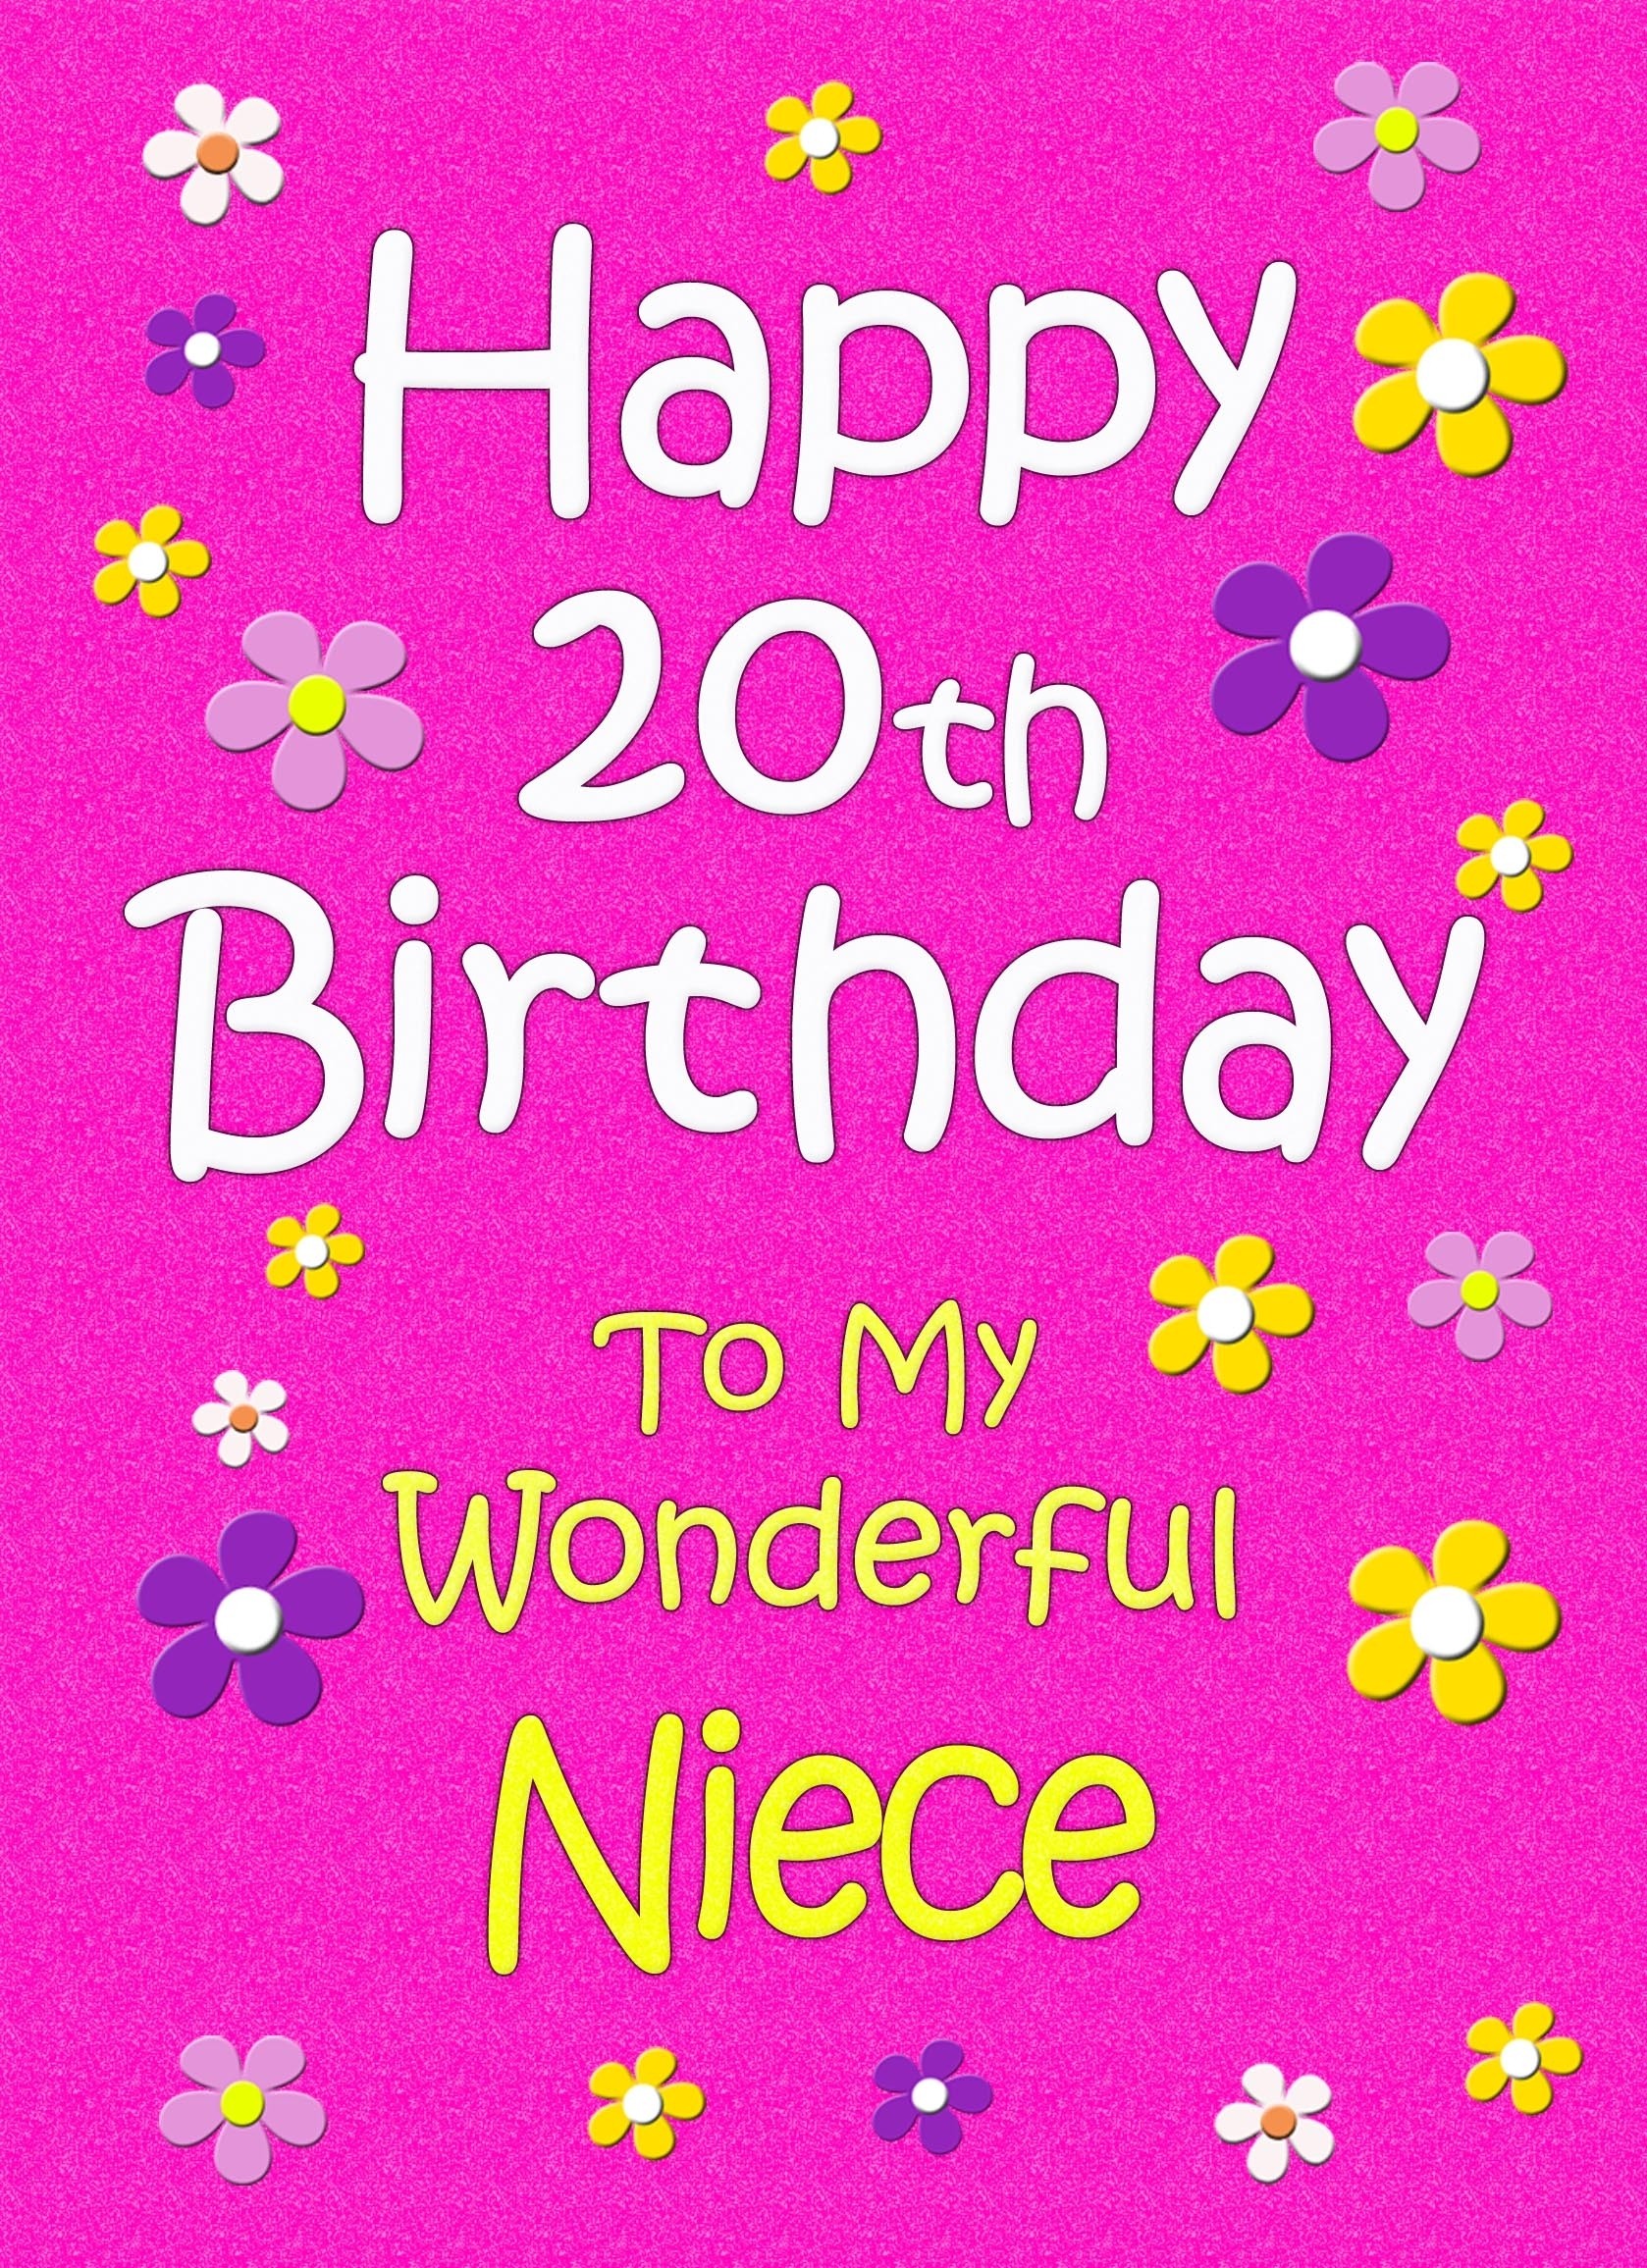 Niece 20th Birthday Card (Pink)